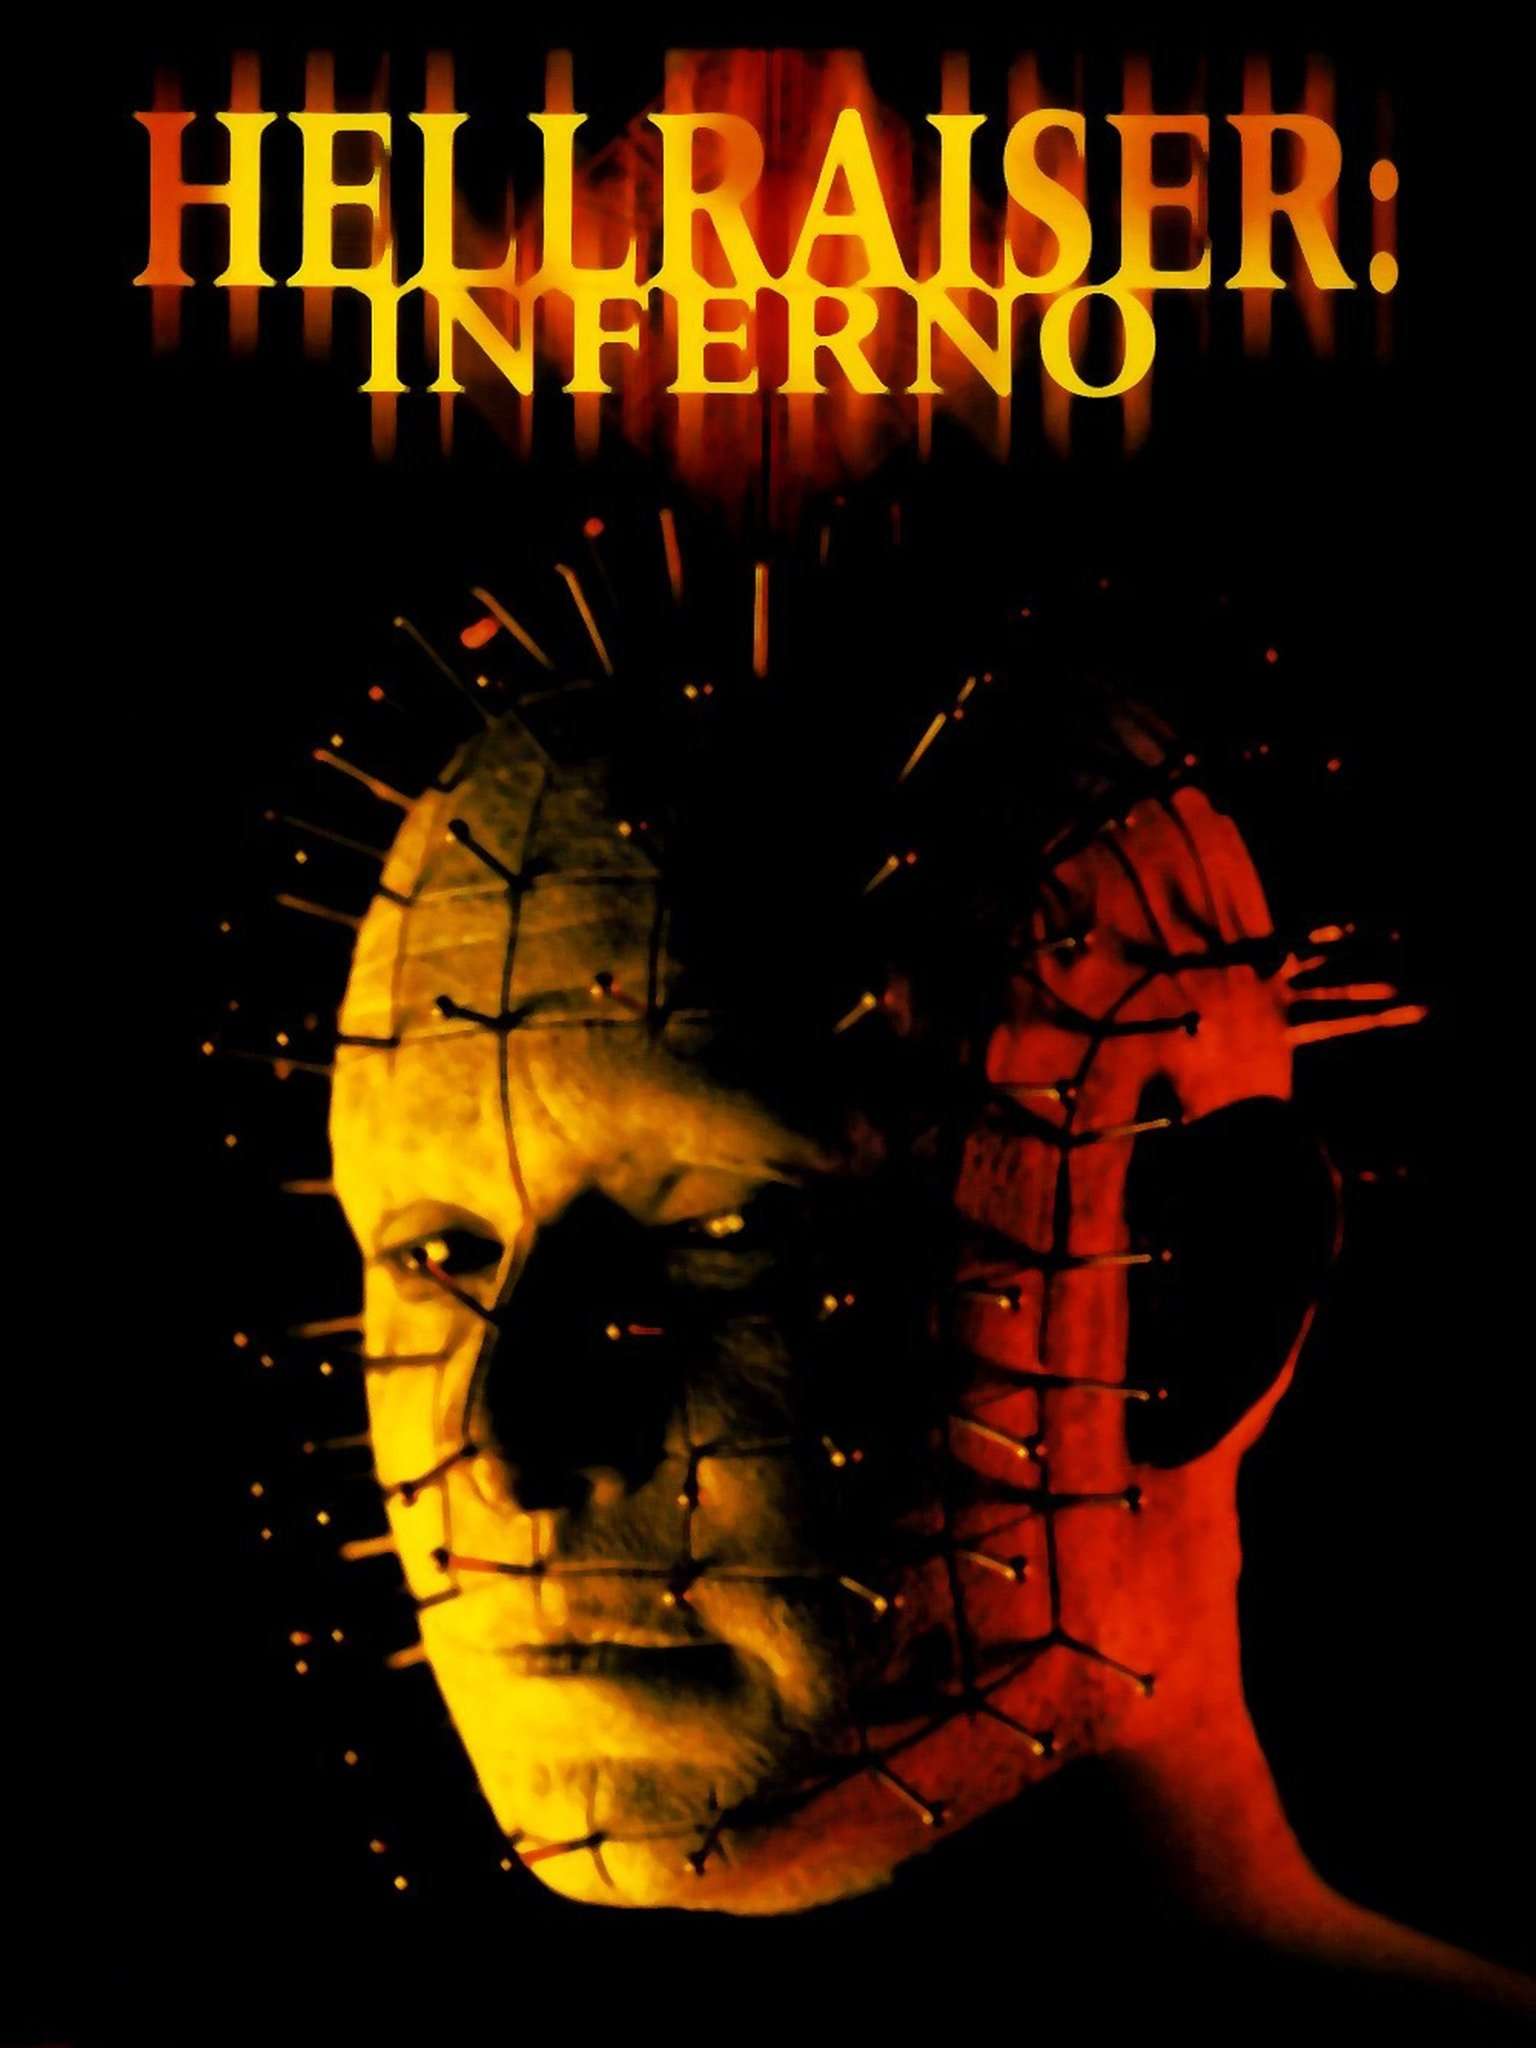 Hellraiser 5 Inferno (2000)